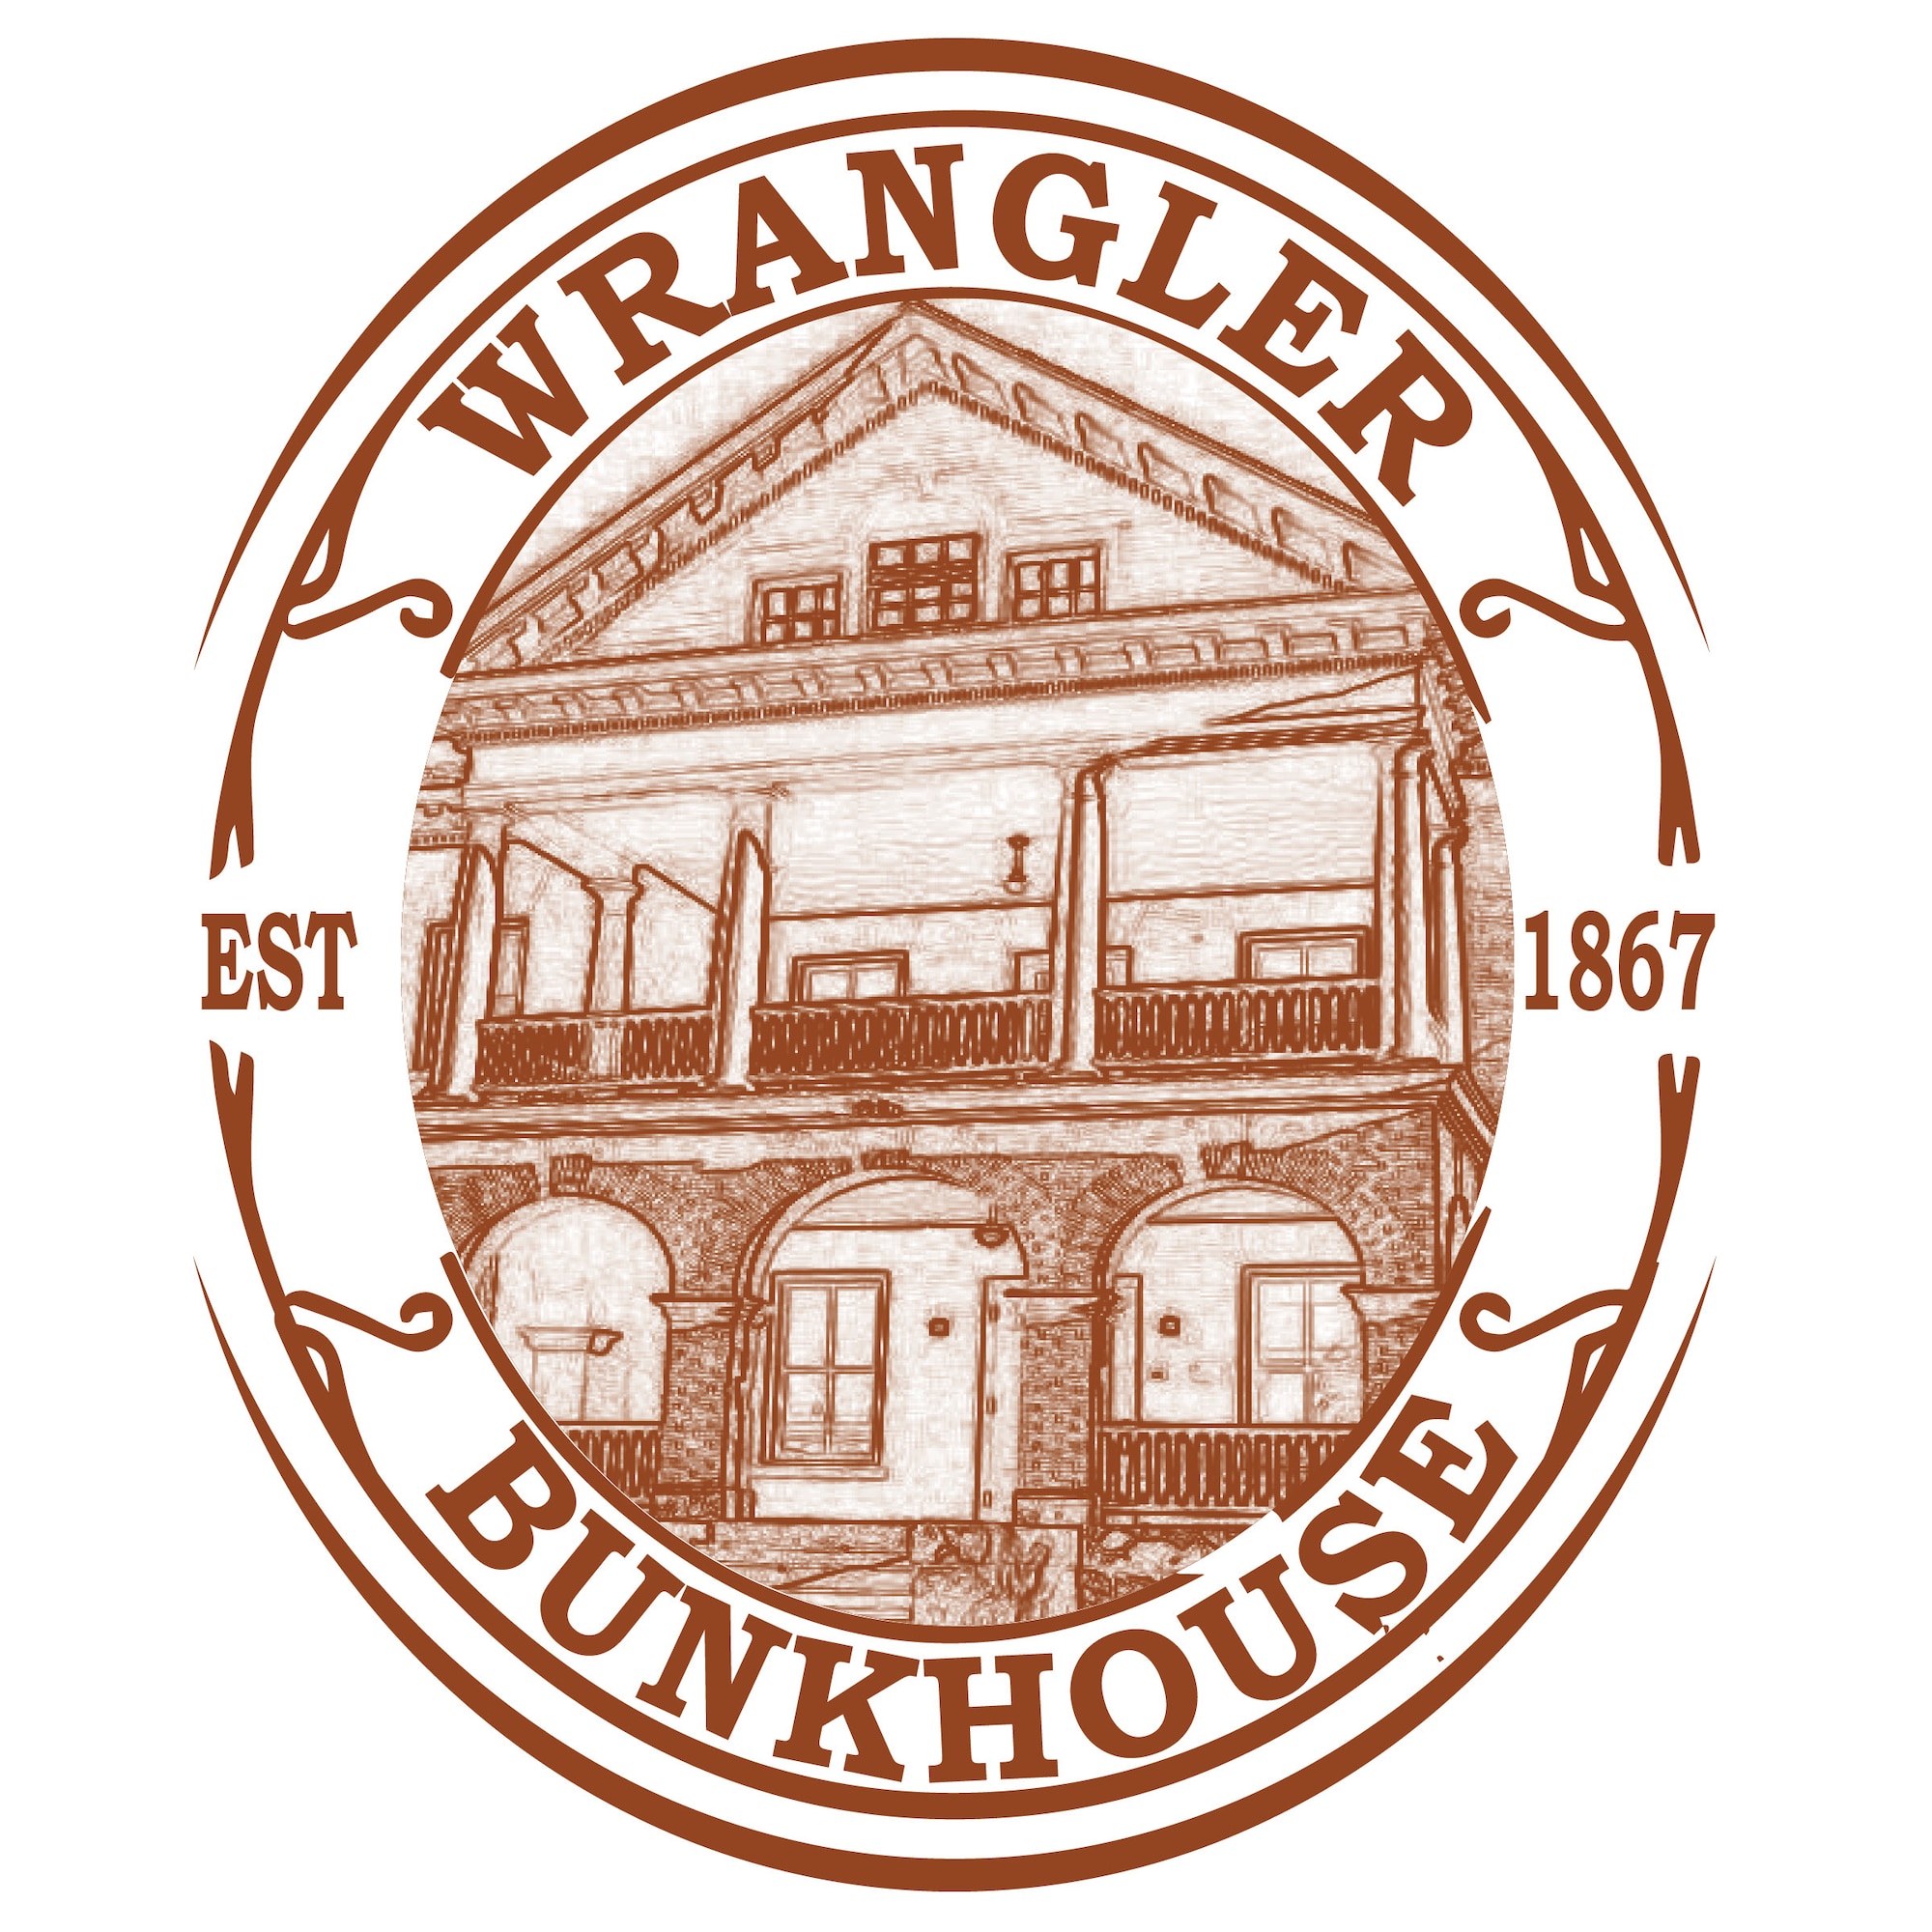 logo depicting brick housing with est 1867 and Wrangler Bunkhouse adorning